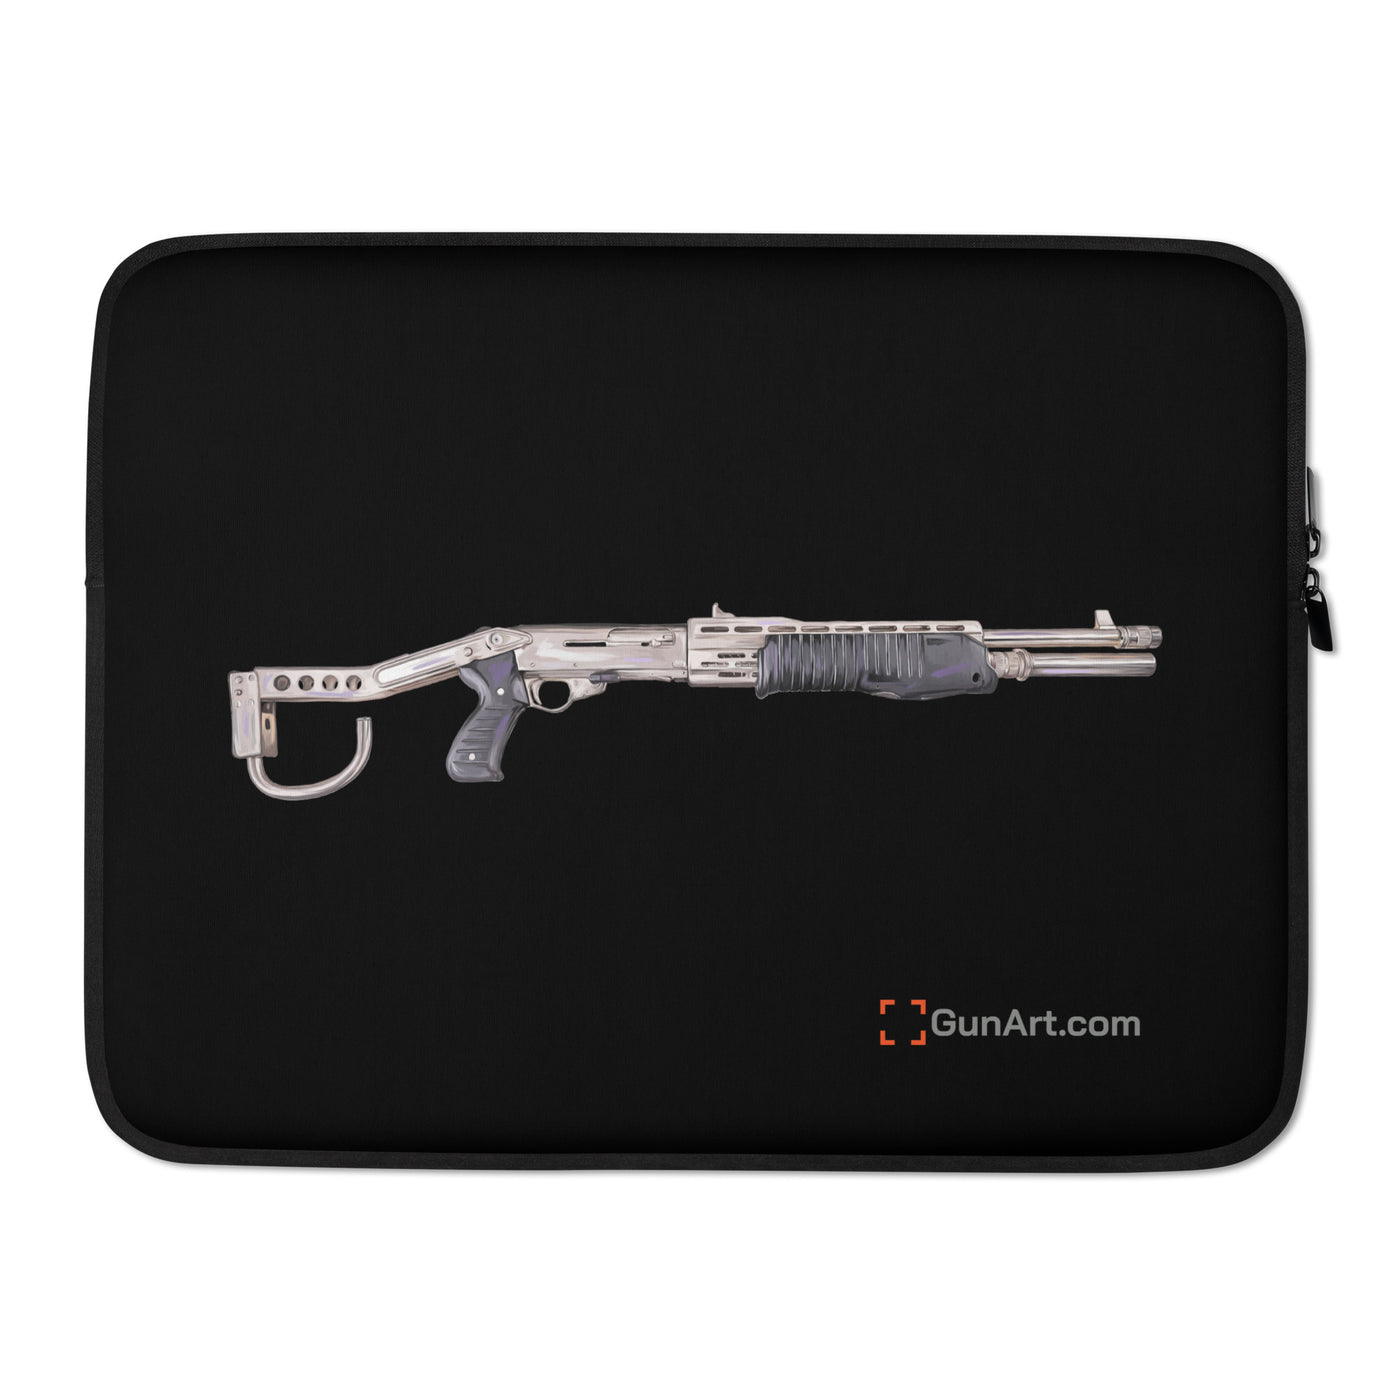 Selectable Mode Combat Shotgun Laptop Sleeve - Just The Piece - Black Background